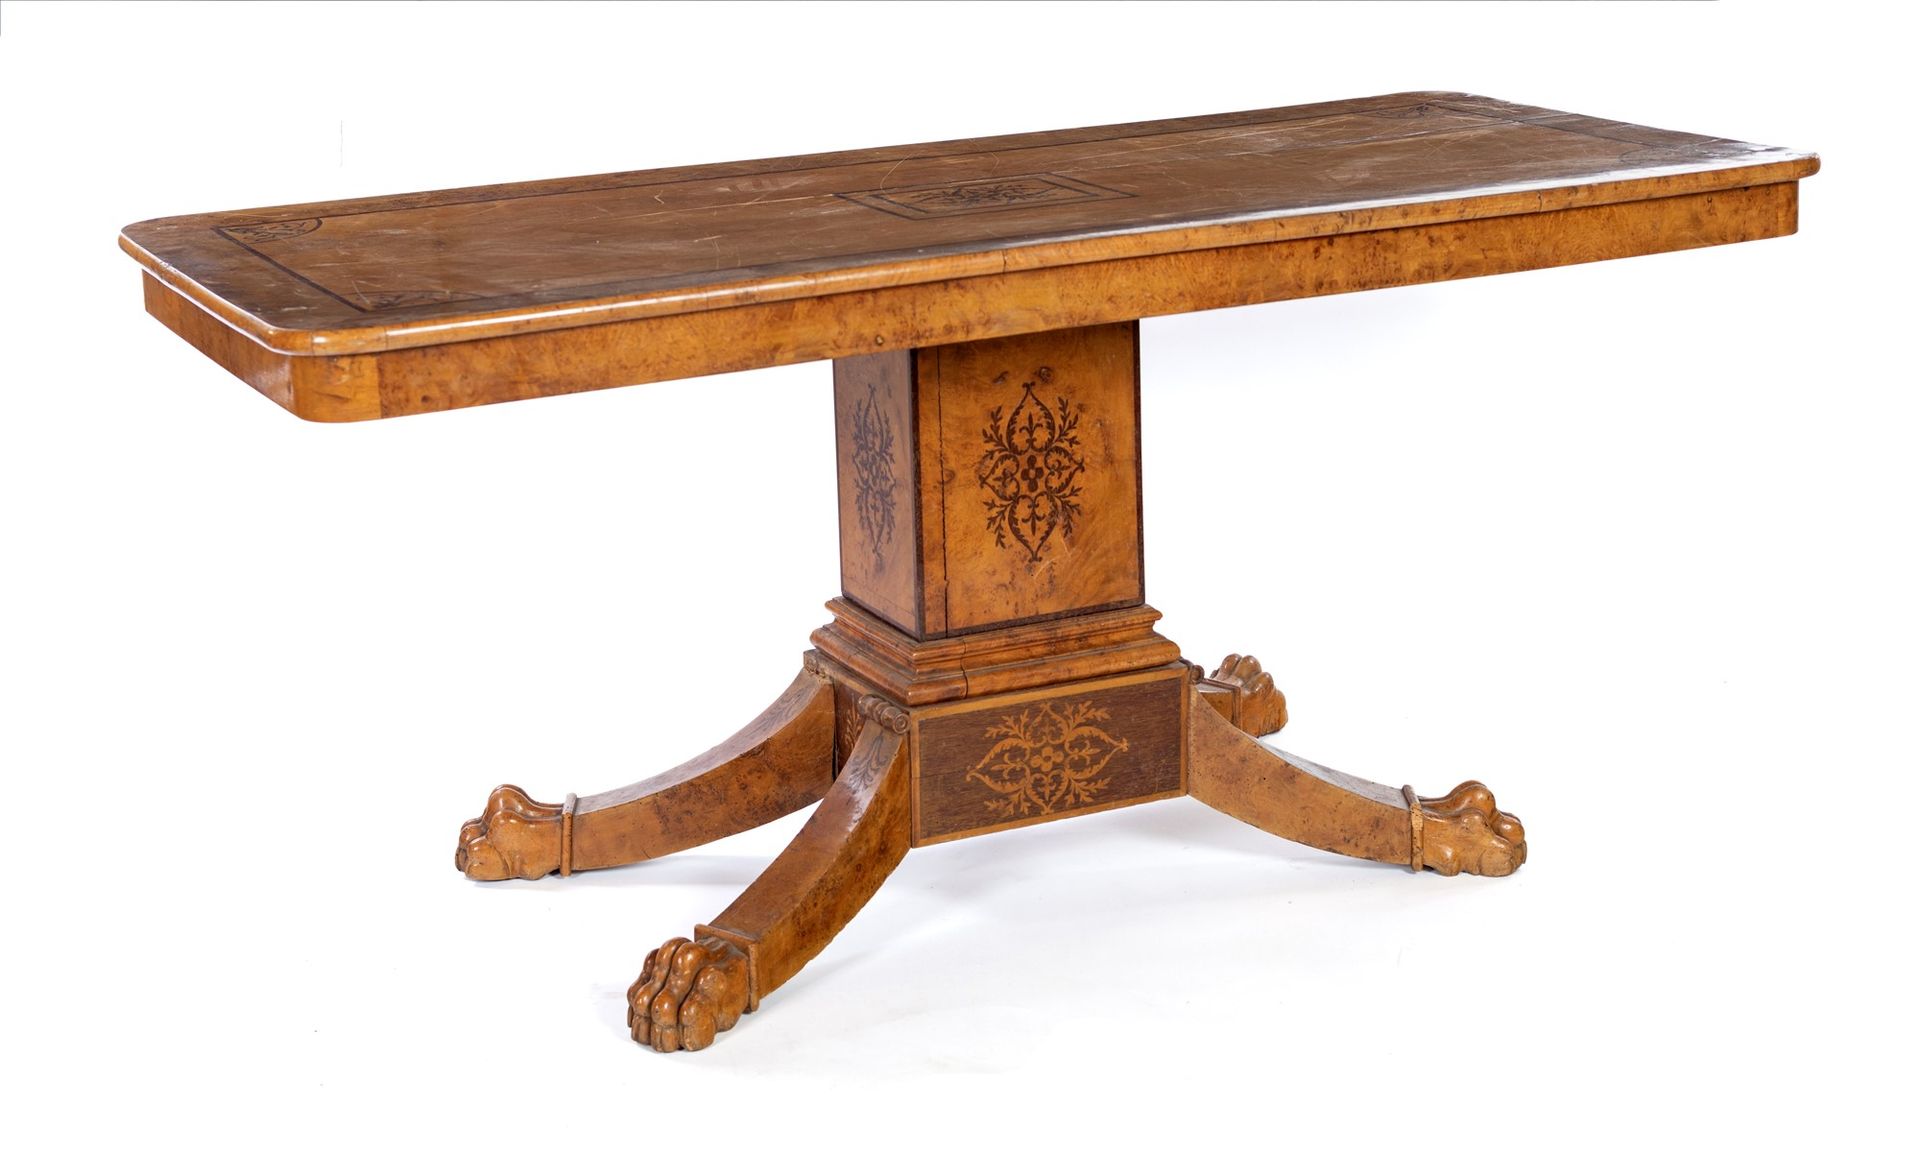 Charles X table décorée d'incrustations ; support central